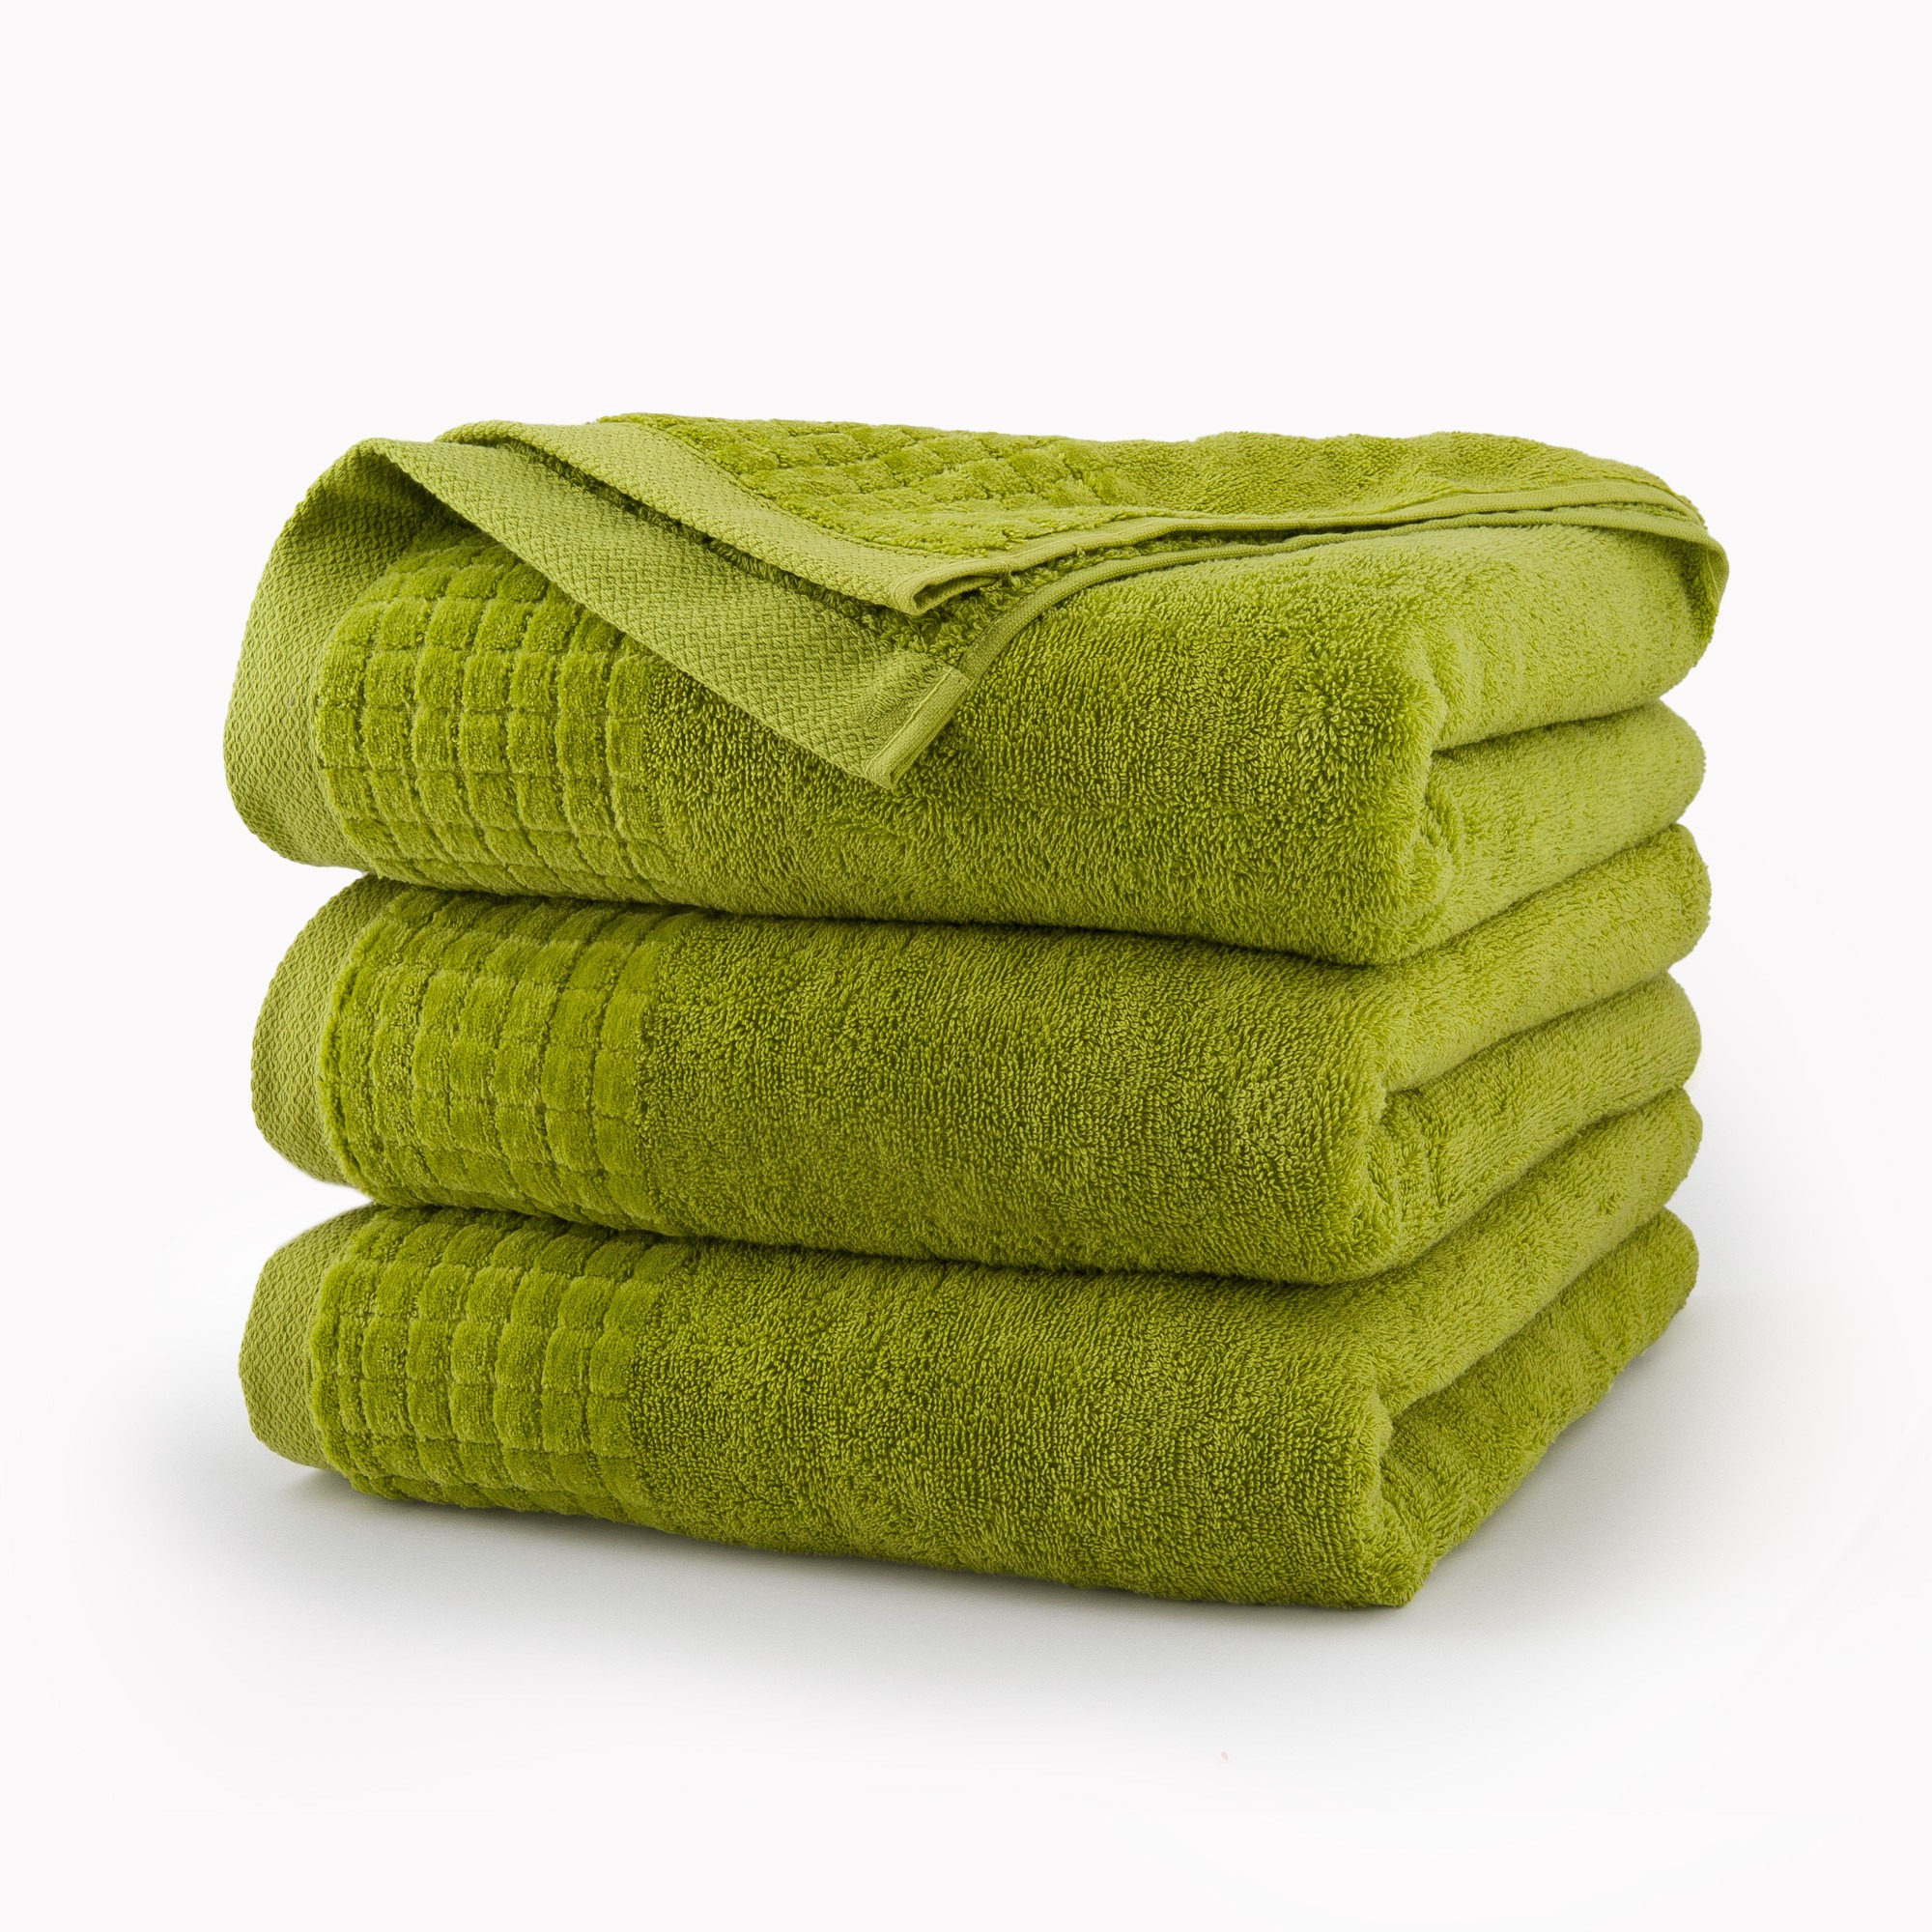 Полотенца chesto. Салатовое полотенце. Зеленое полотенце. Полотенце махровое зеленый. Сложенные полотенца.